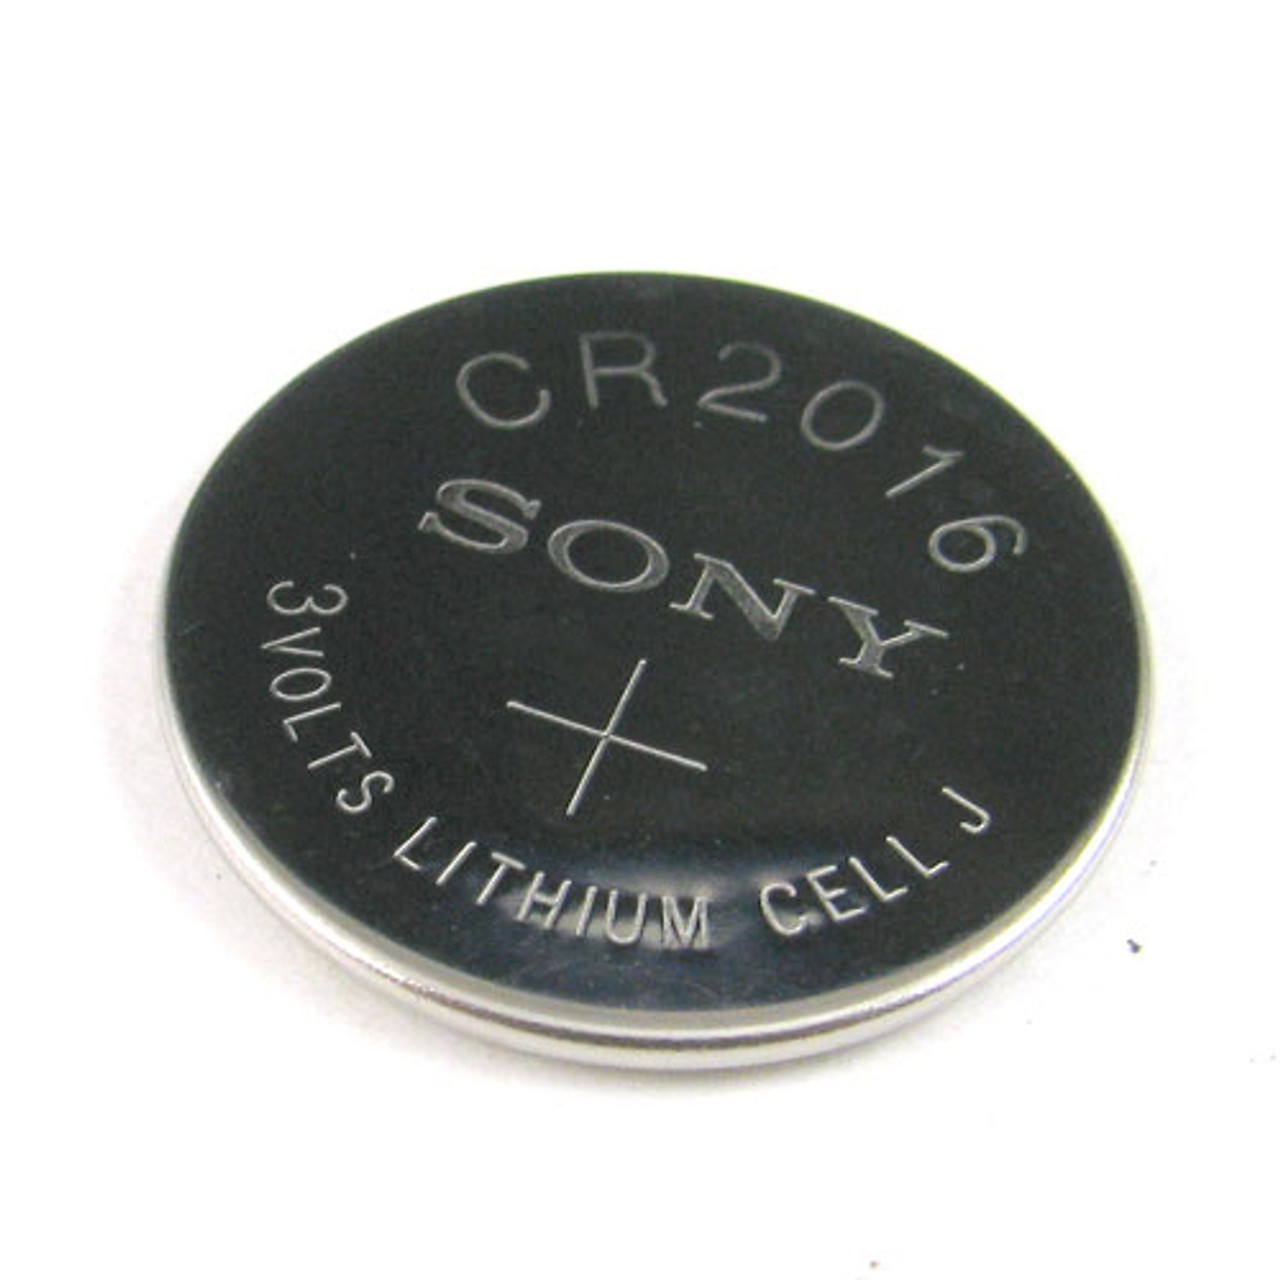 Sony CR2016 3V Lithium Button Cell Battery - Bulk